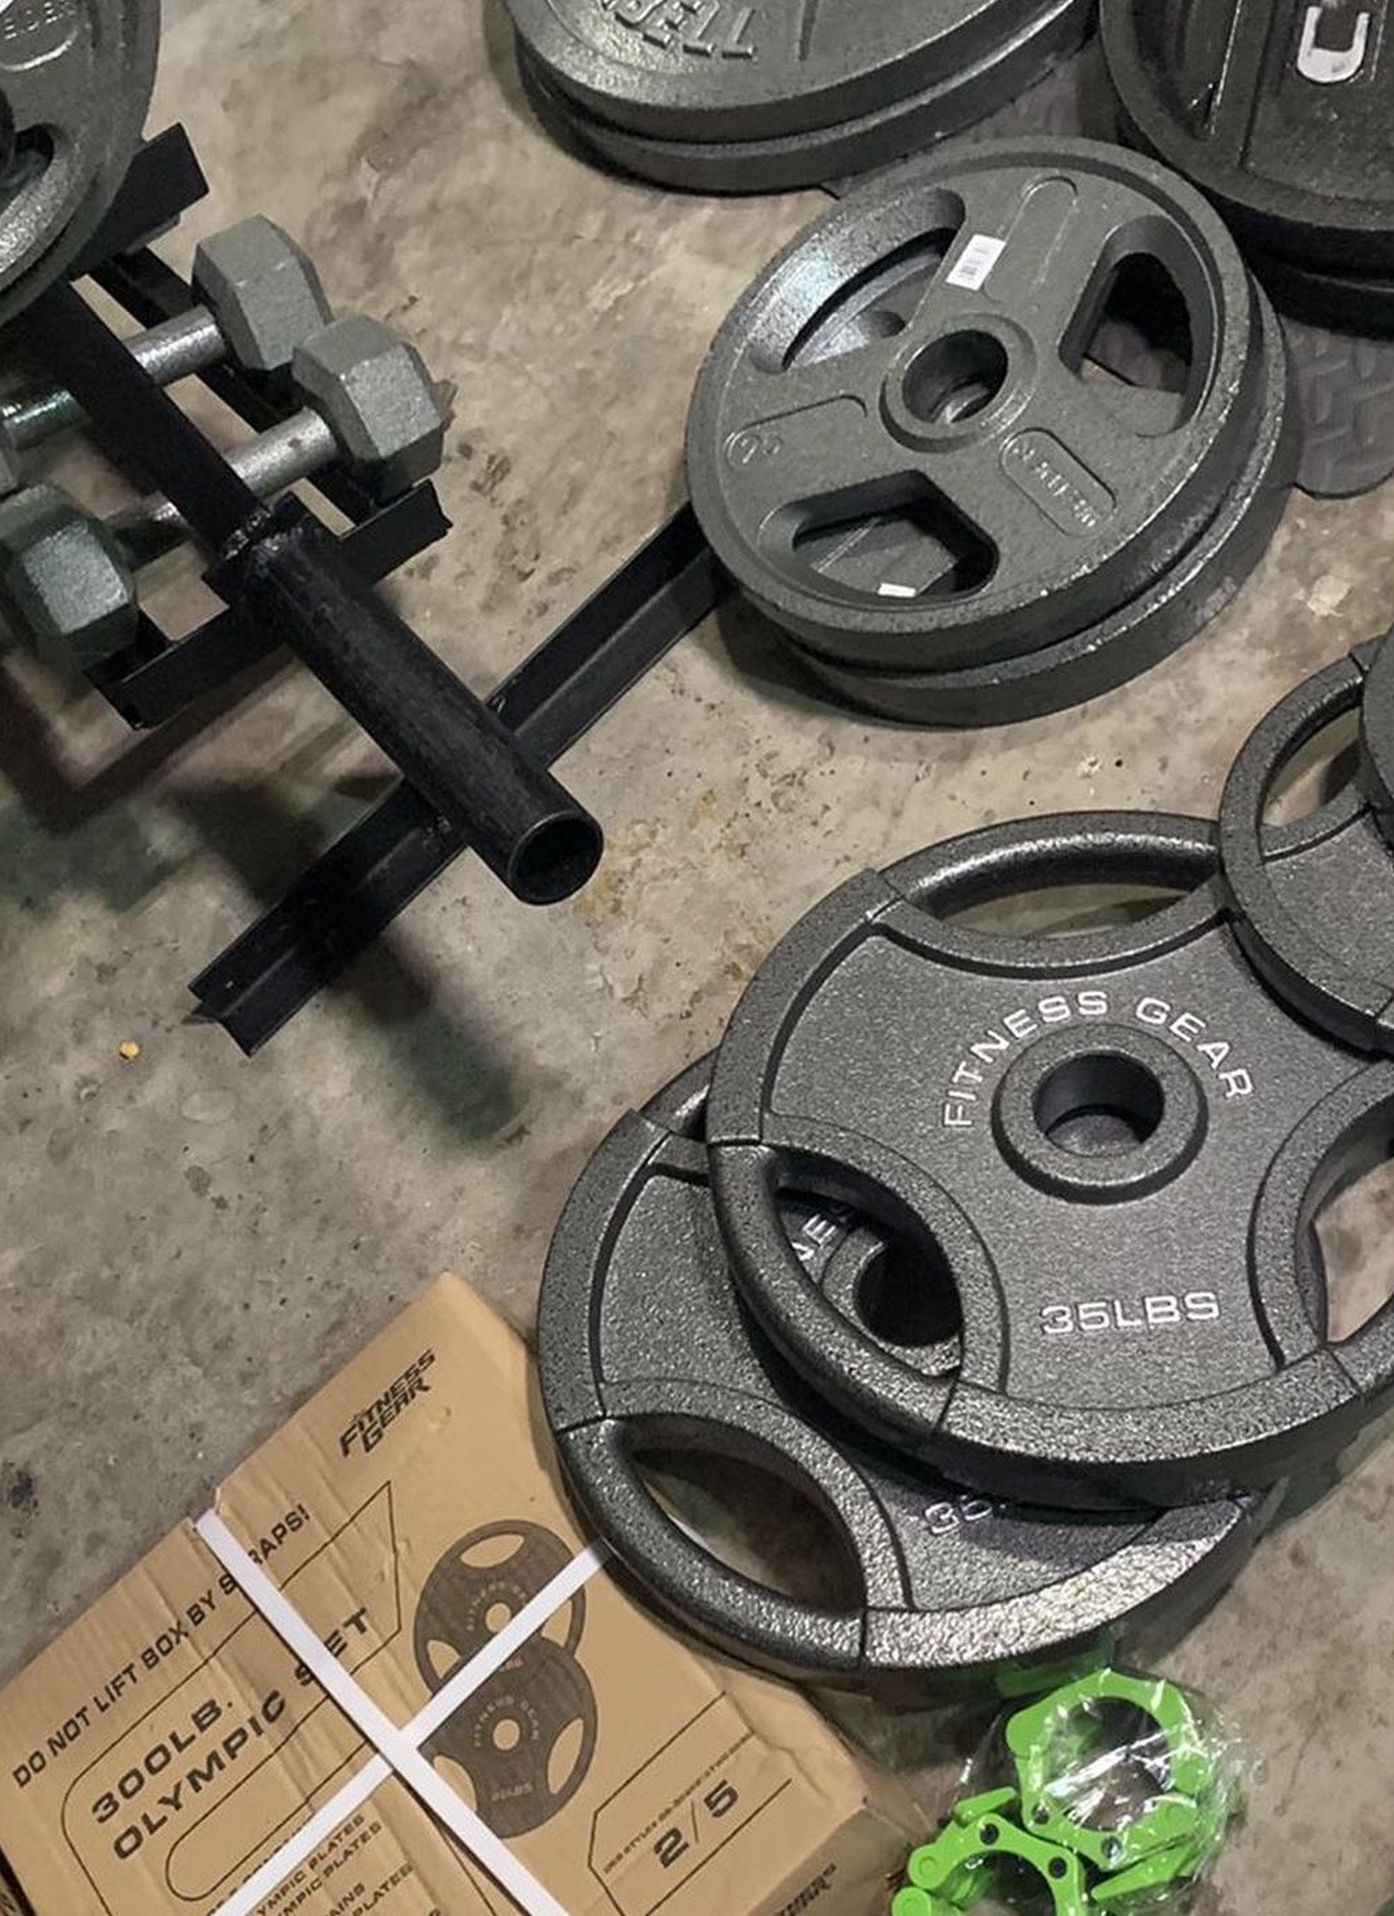 300 lb Weight set gym equipment weights barbells collars bench press set 45 lb plates Etc.. Weights Plates Set